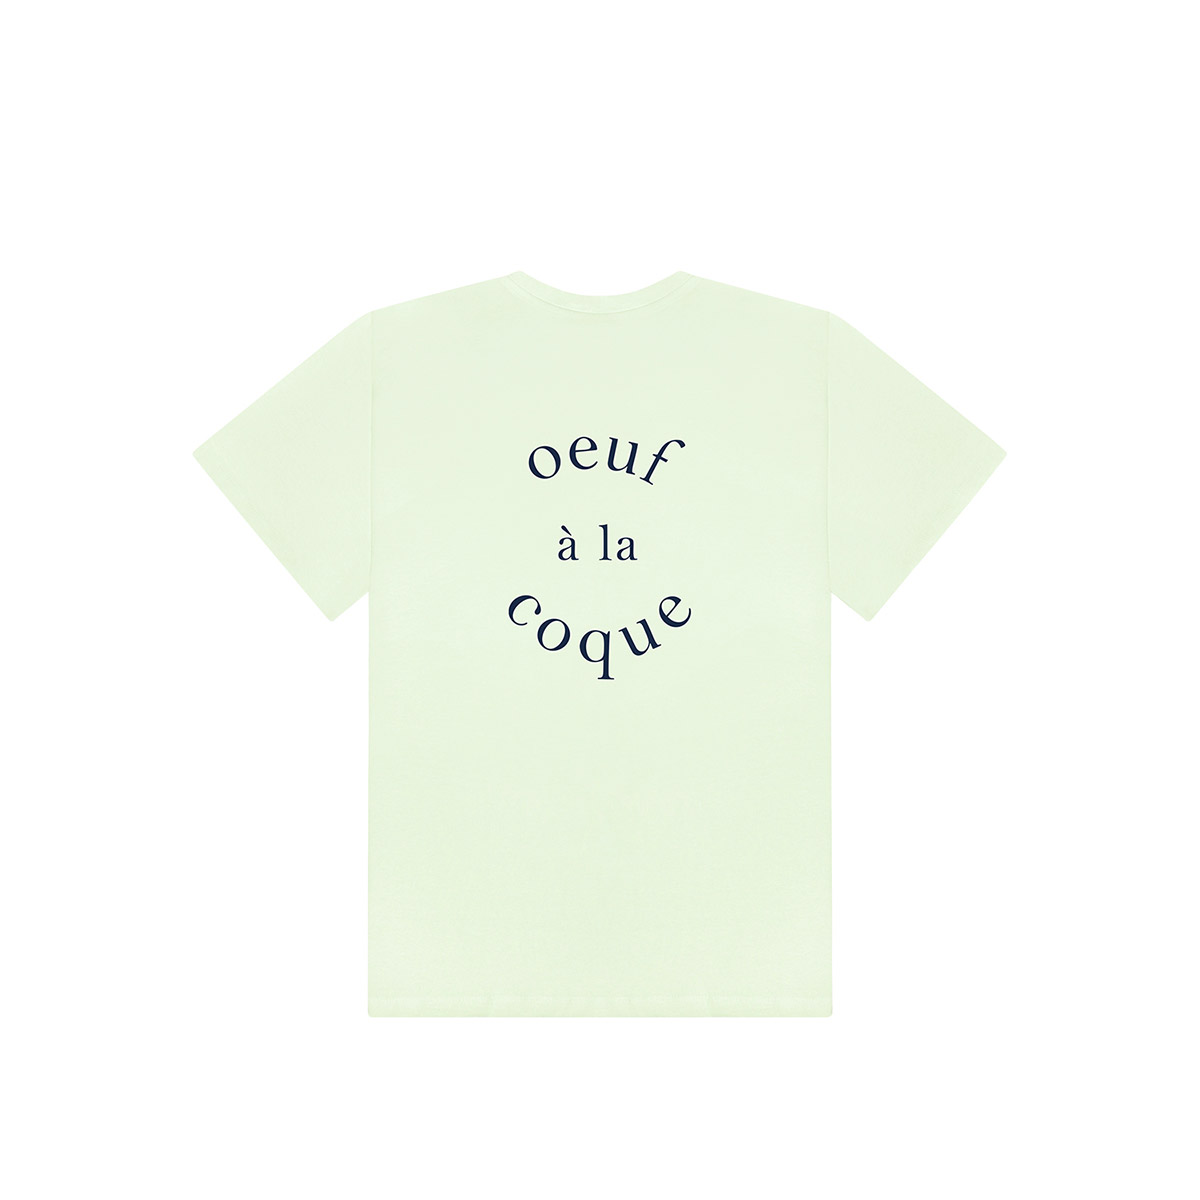 oalc GRAPHIC T-SHIRT 그래픽 티셔츠 (MINT)